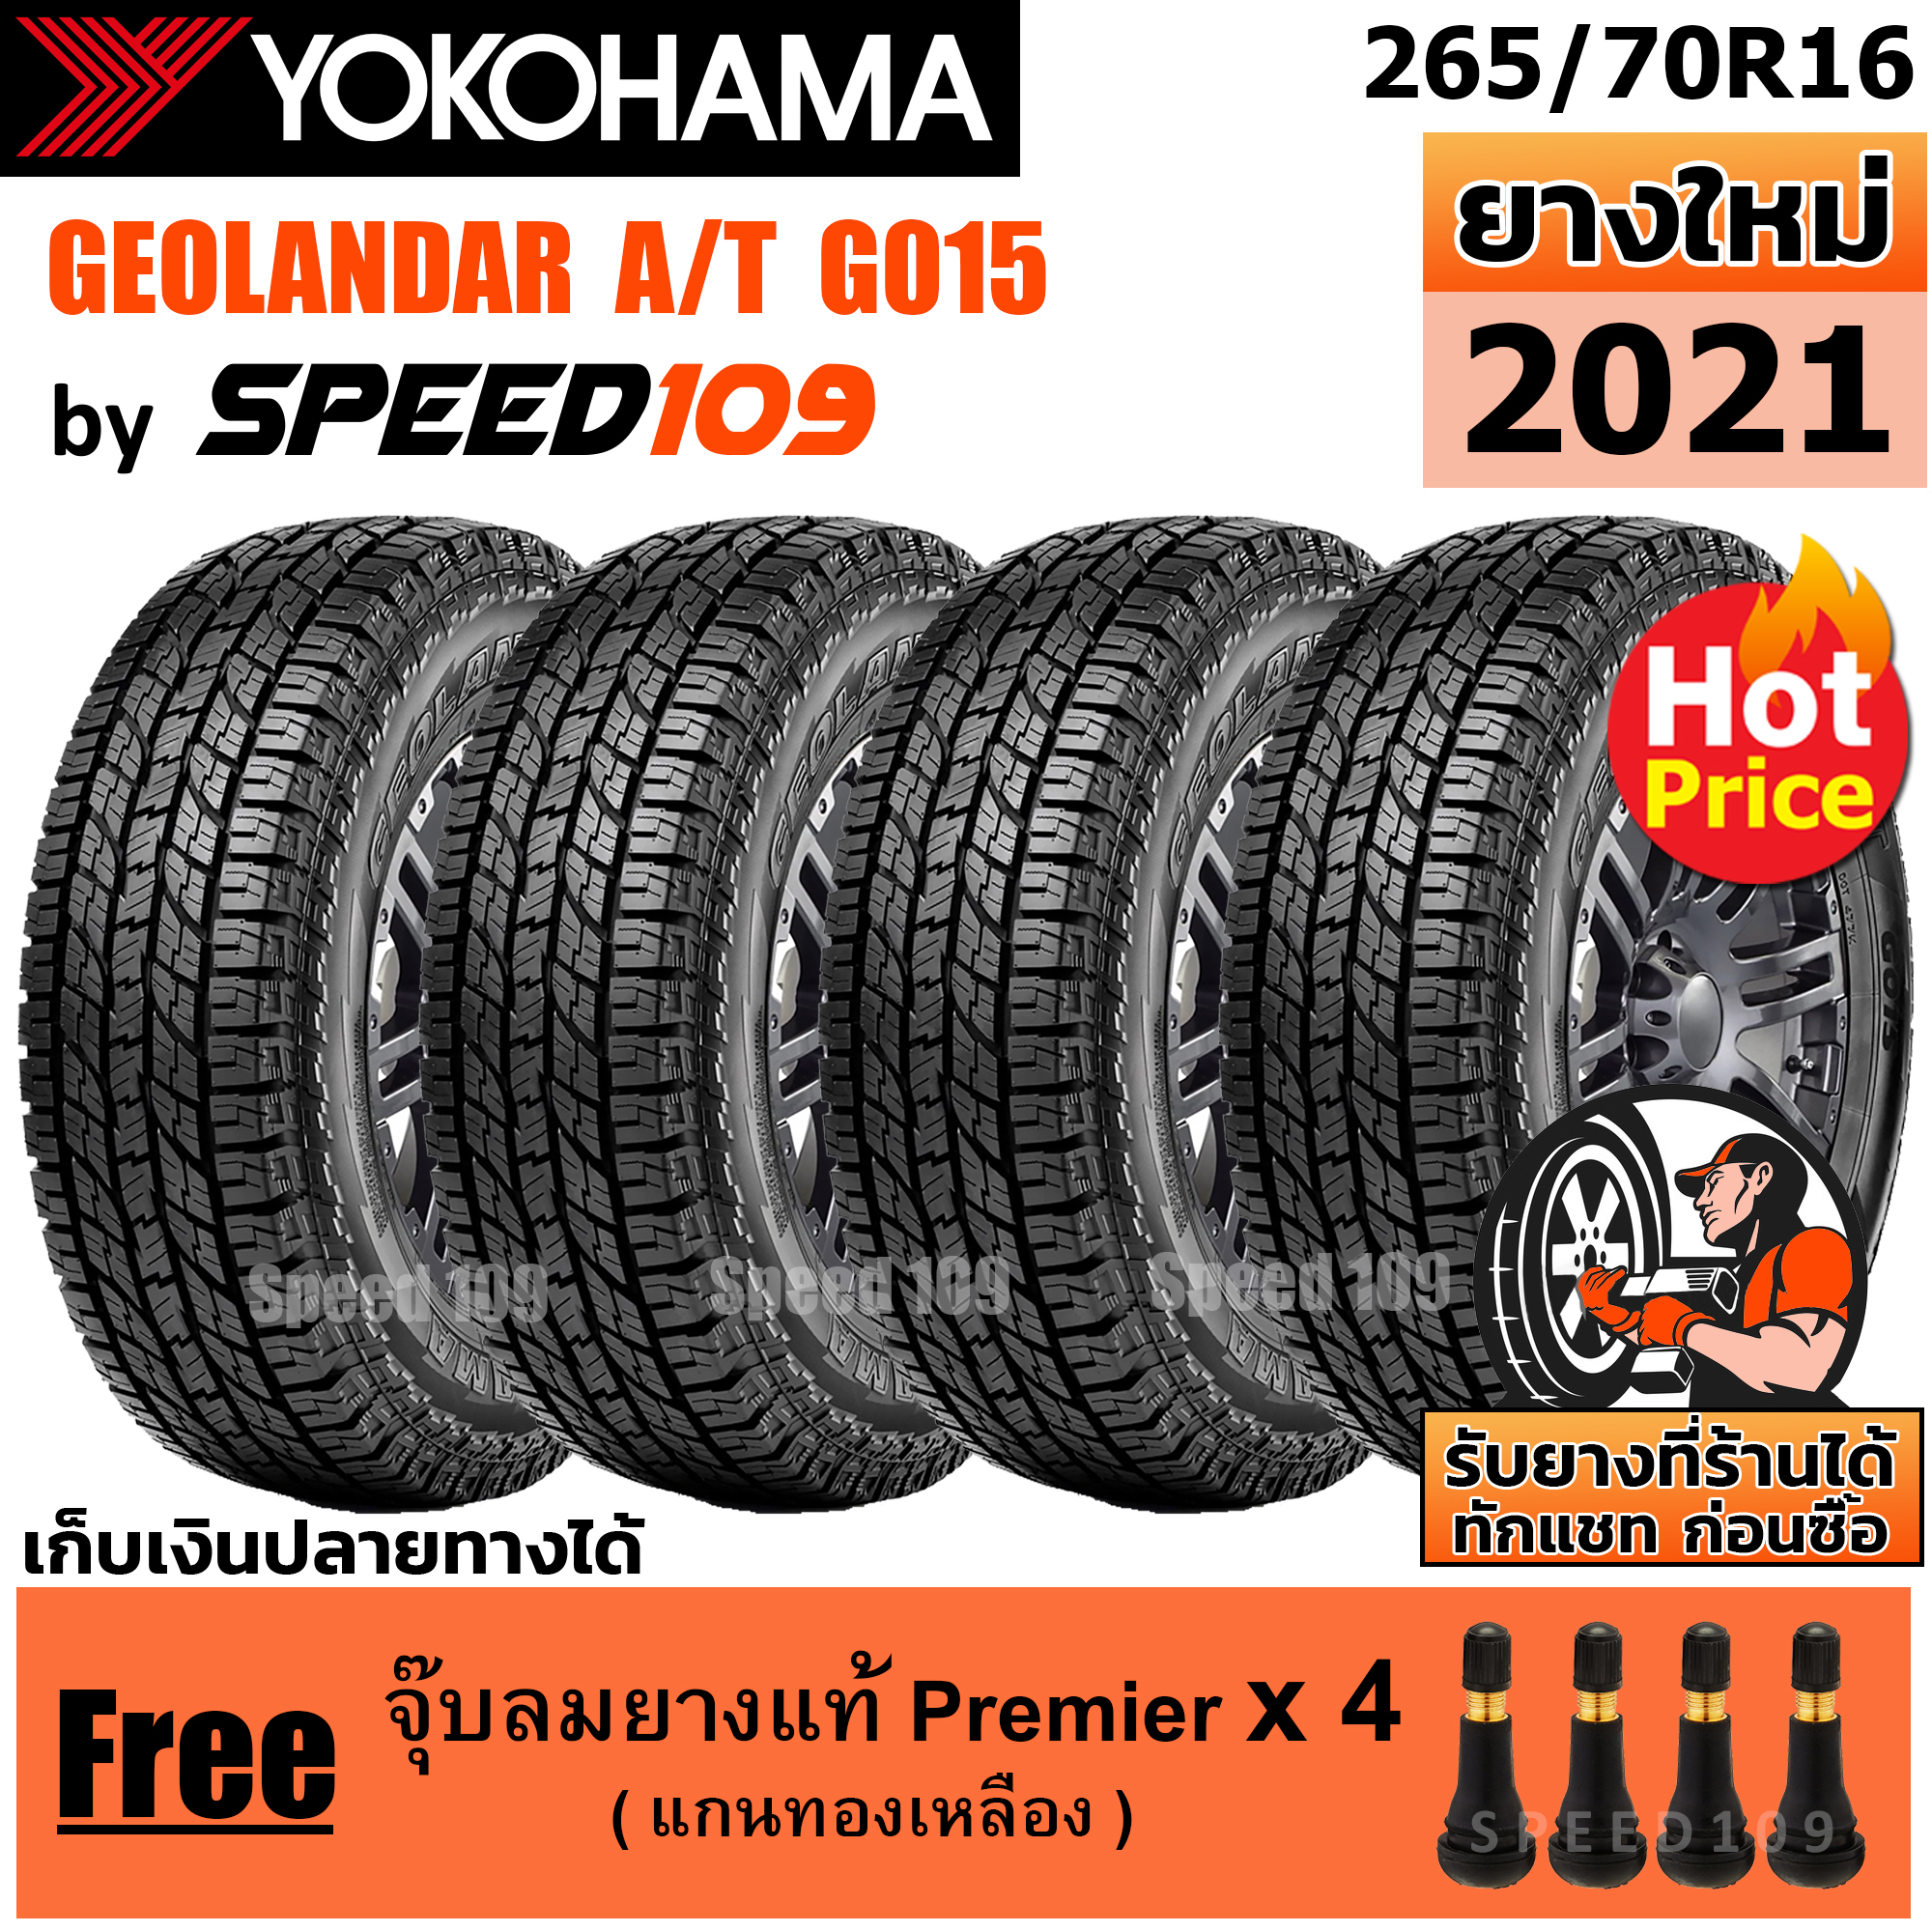 YOKOHAMA ยางรถยนต์ ขอบ 16 ขนาด 265/70R16 รุ่น GEOLANDAR A/T G015 - 4 เส้น (ปี 2021)